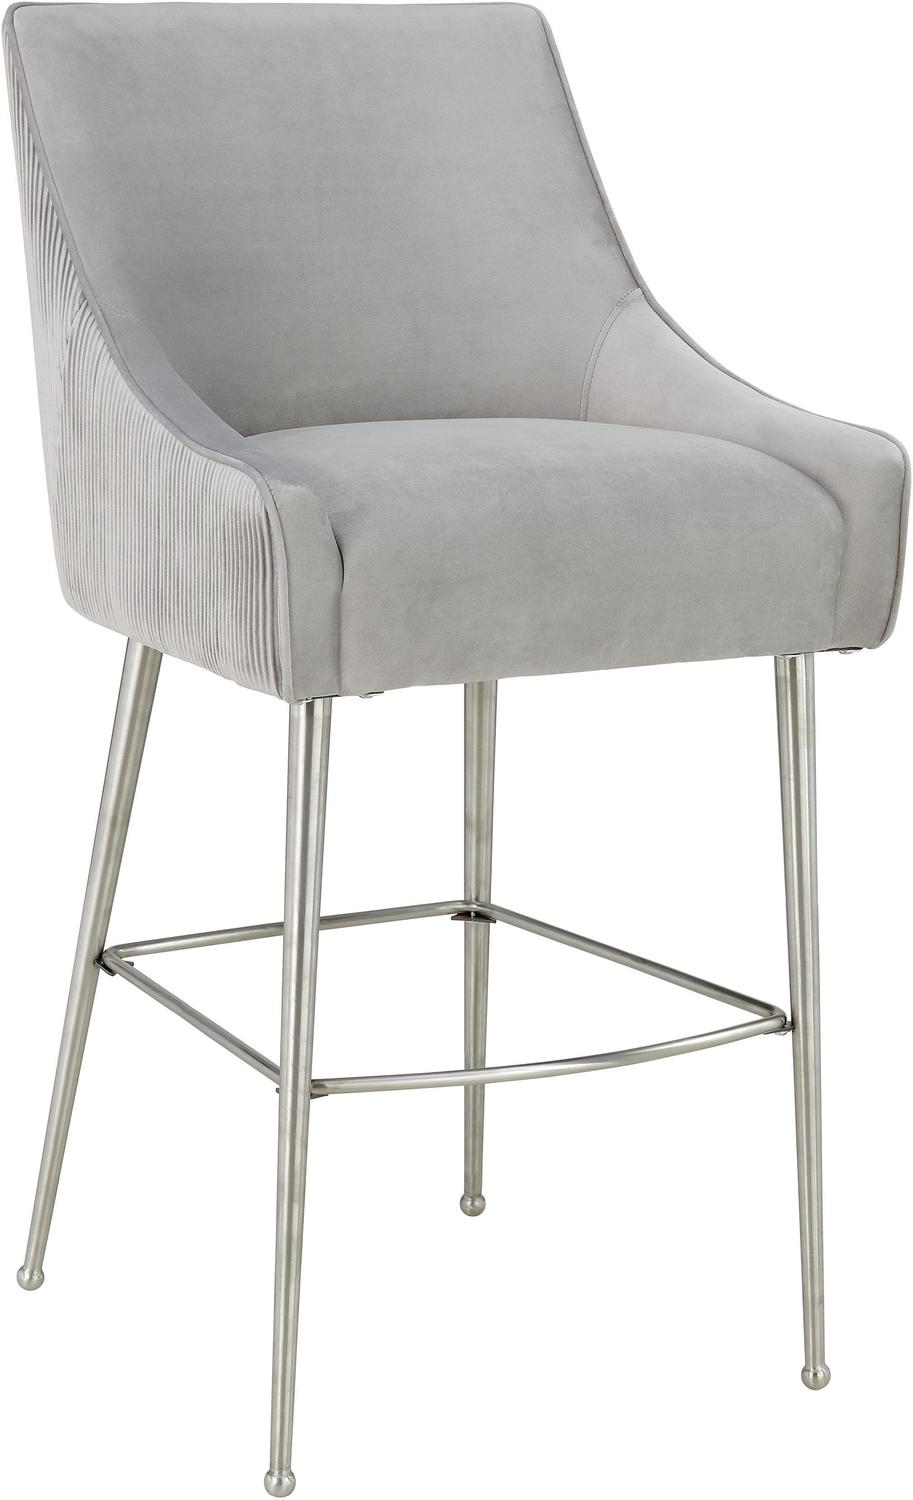 bar stools set of 2 counter height Contemporary Design Furniture Stools Light Grey